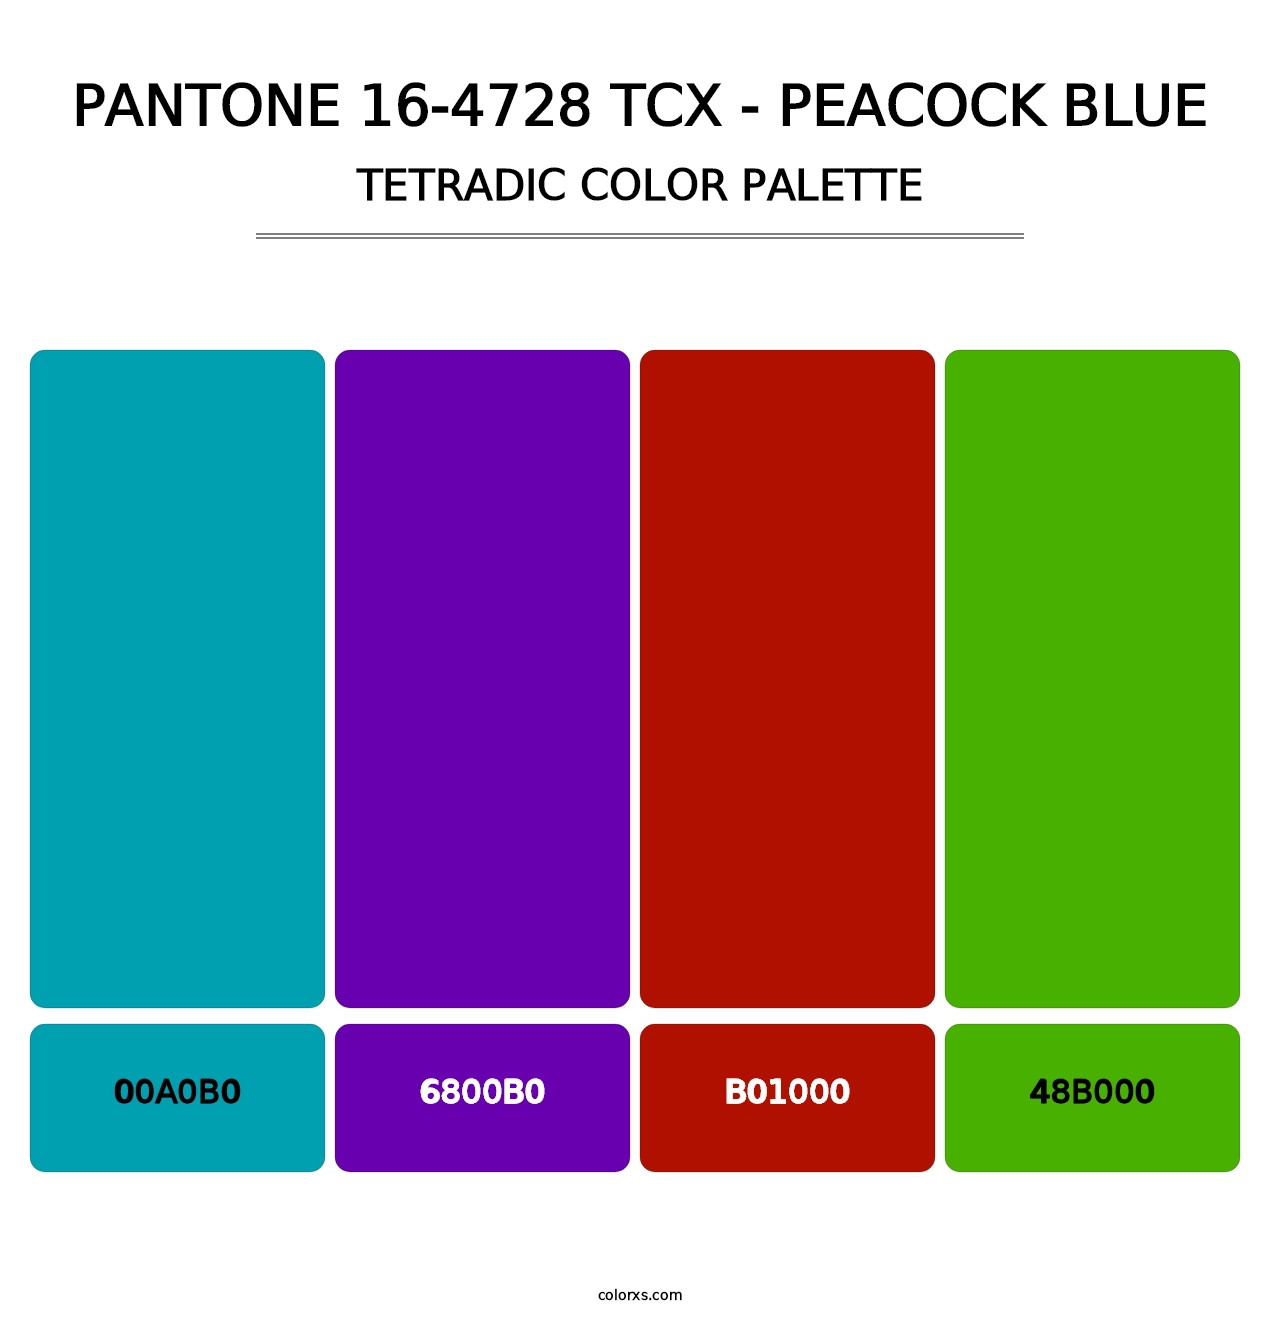 PANTONE 16-4728 TCX - Peacock Blue - Tetradic Color Palette